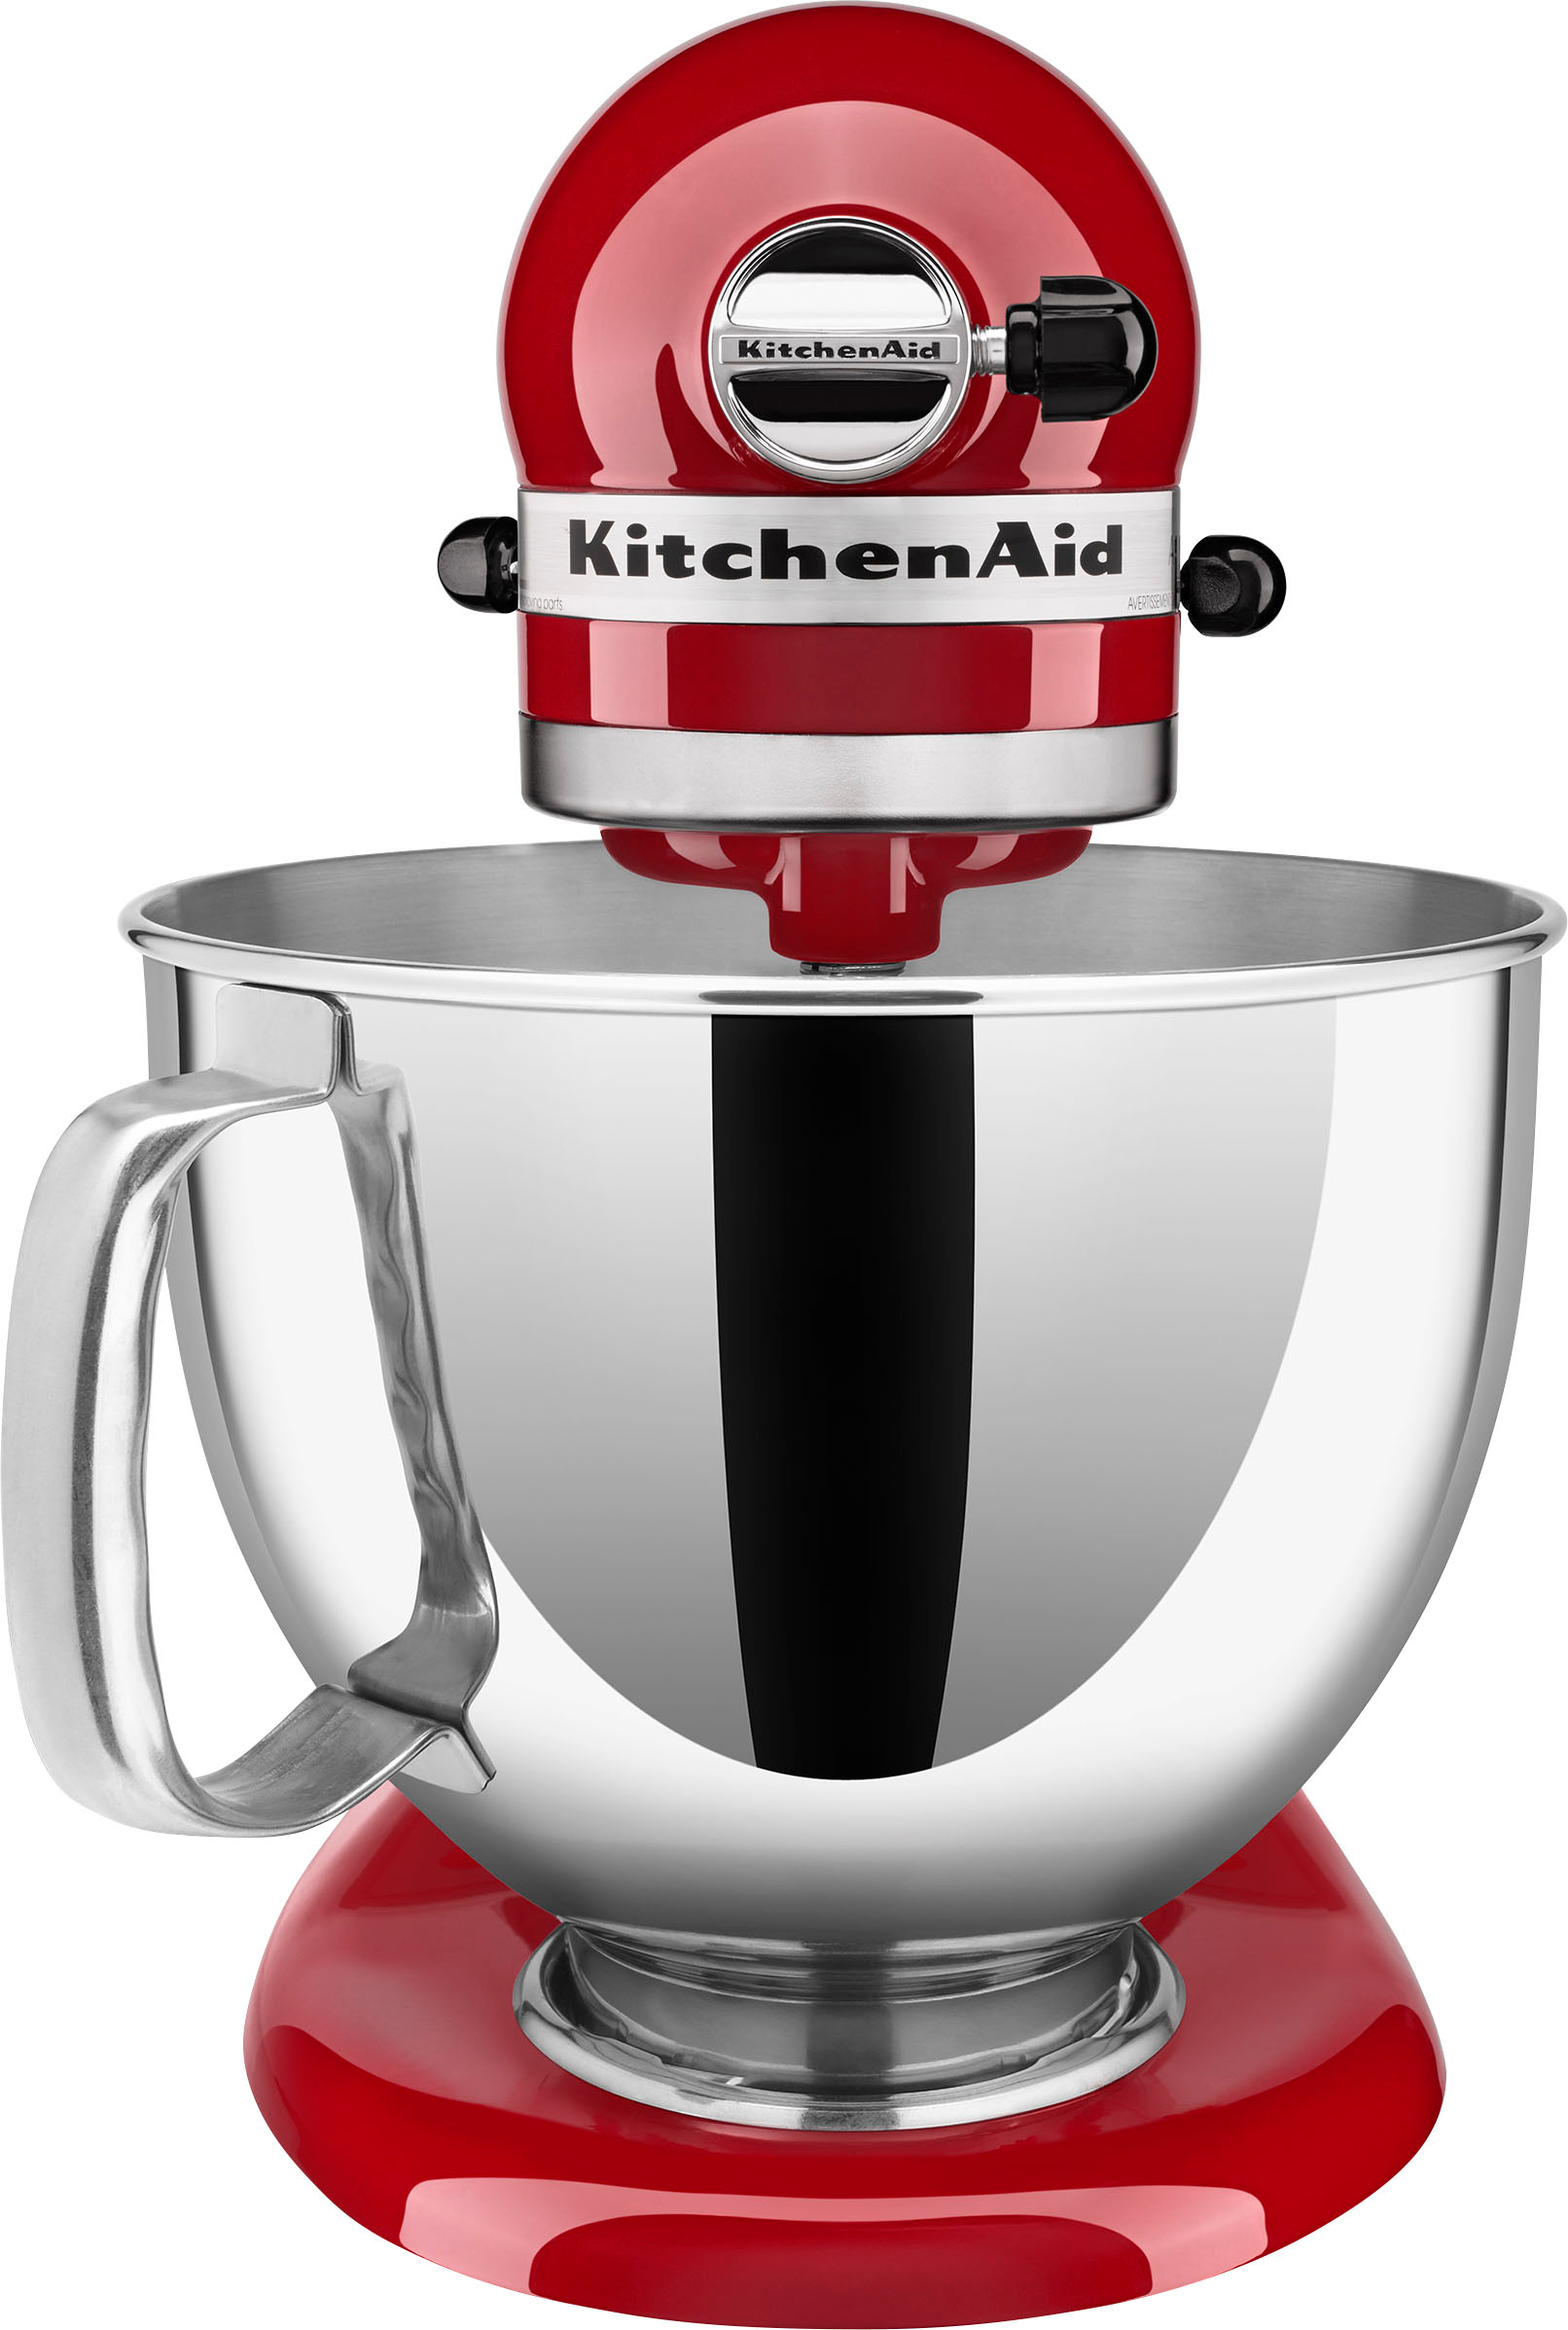 KitchenAid KSM150PSER Artisan Empire Red 5-Quart Tilt-Head Stand Mixer +  Reviews